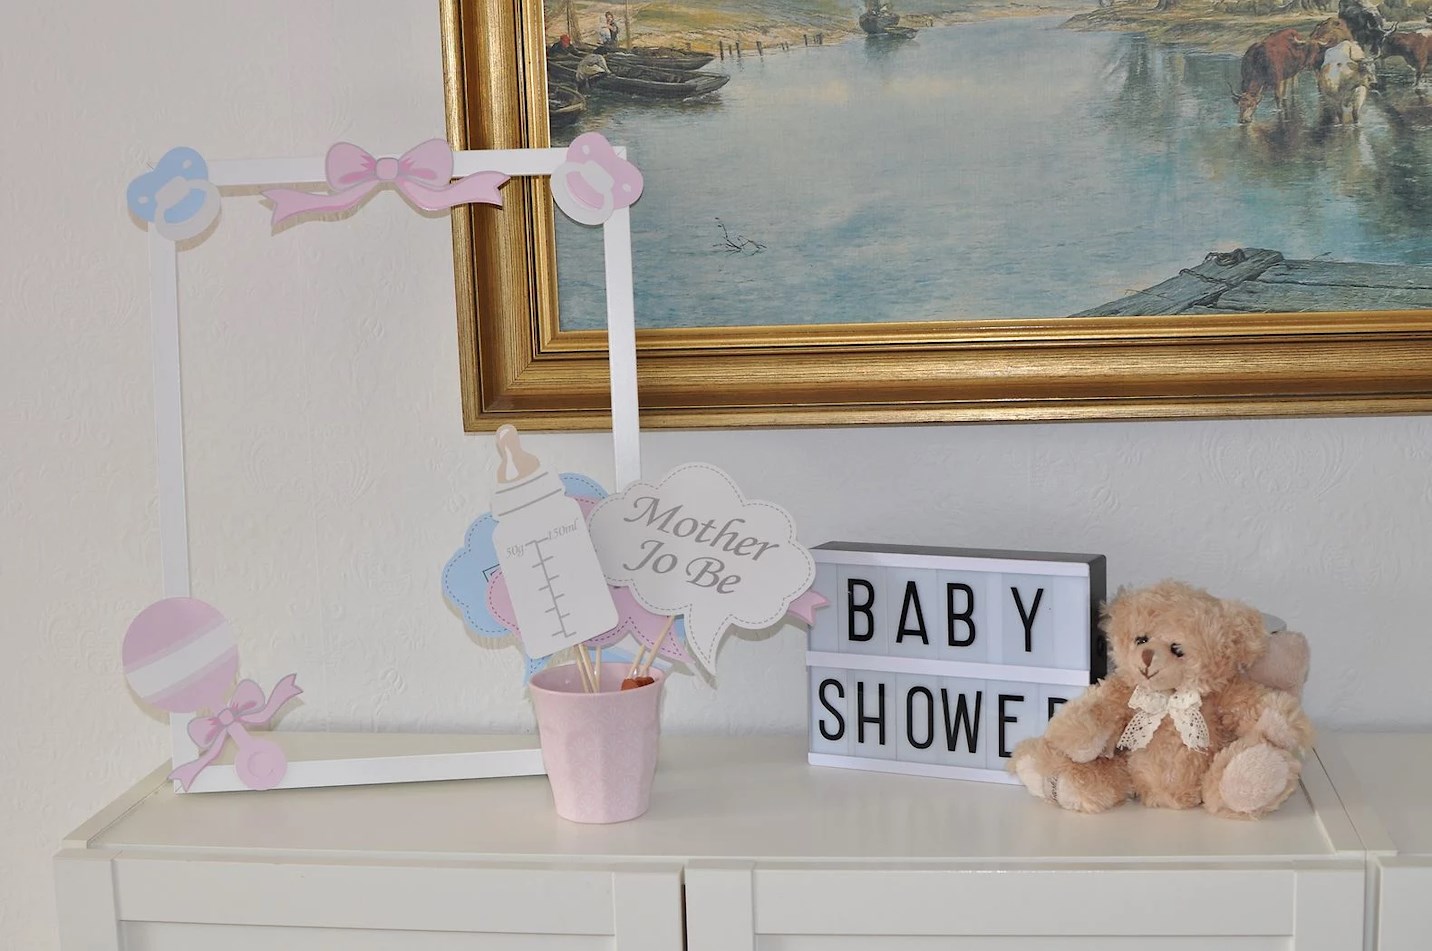 Babyshower photo booth